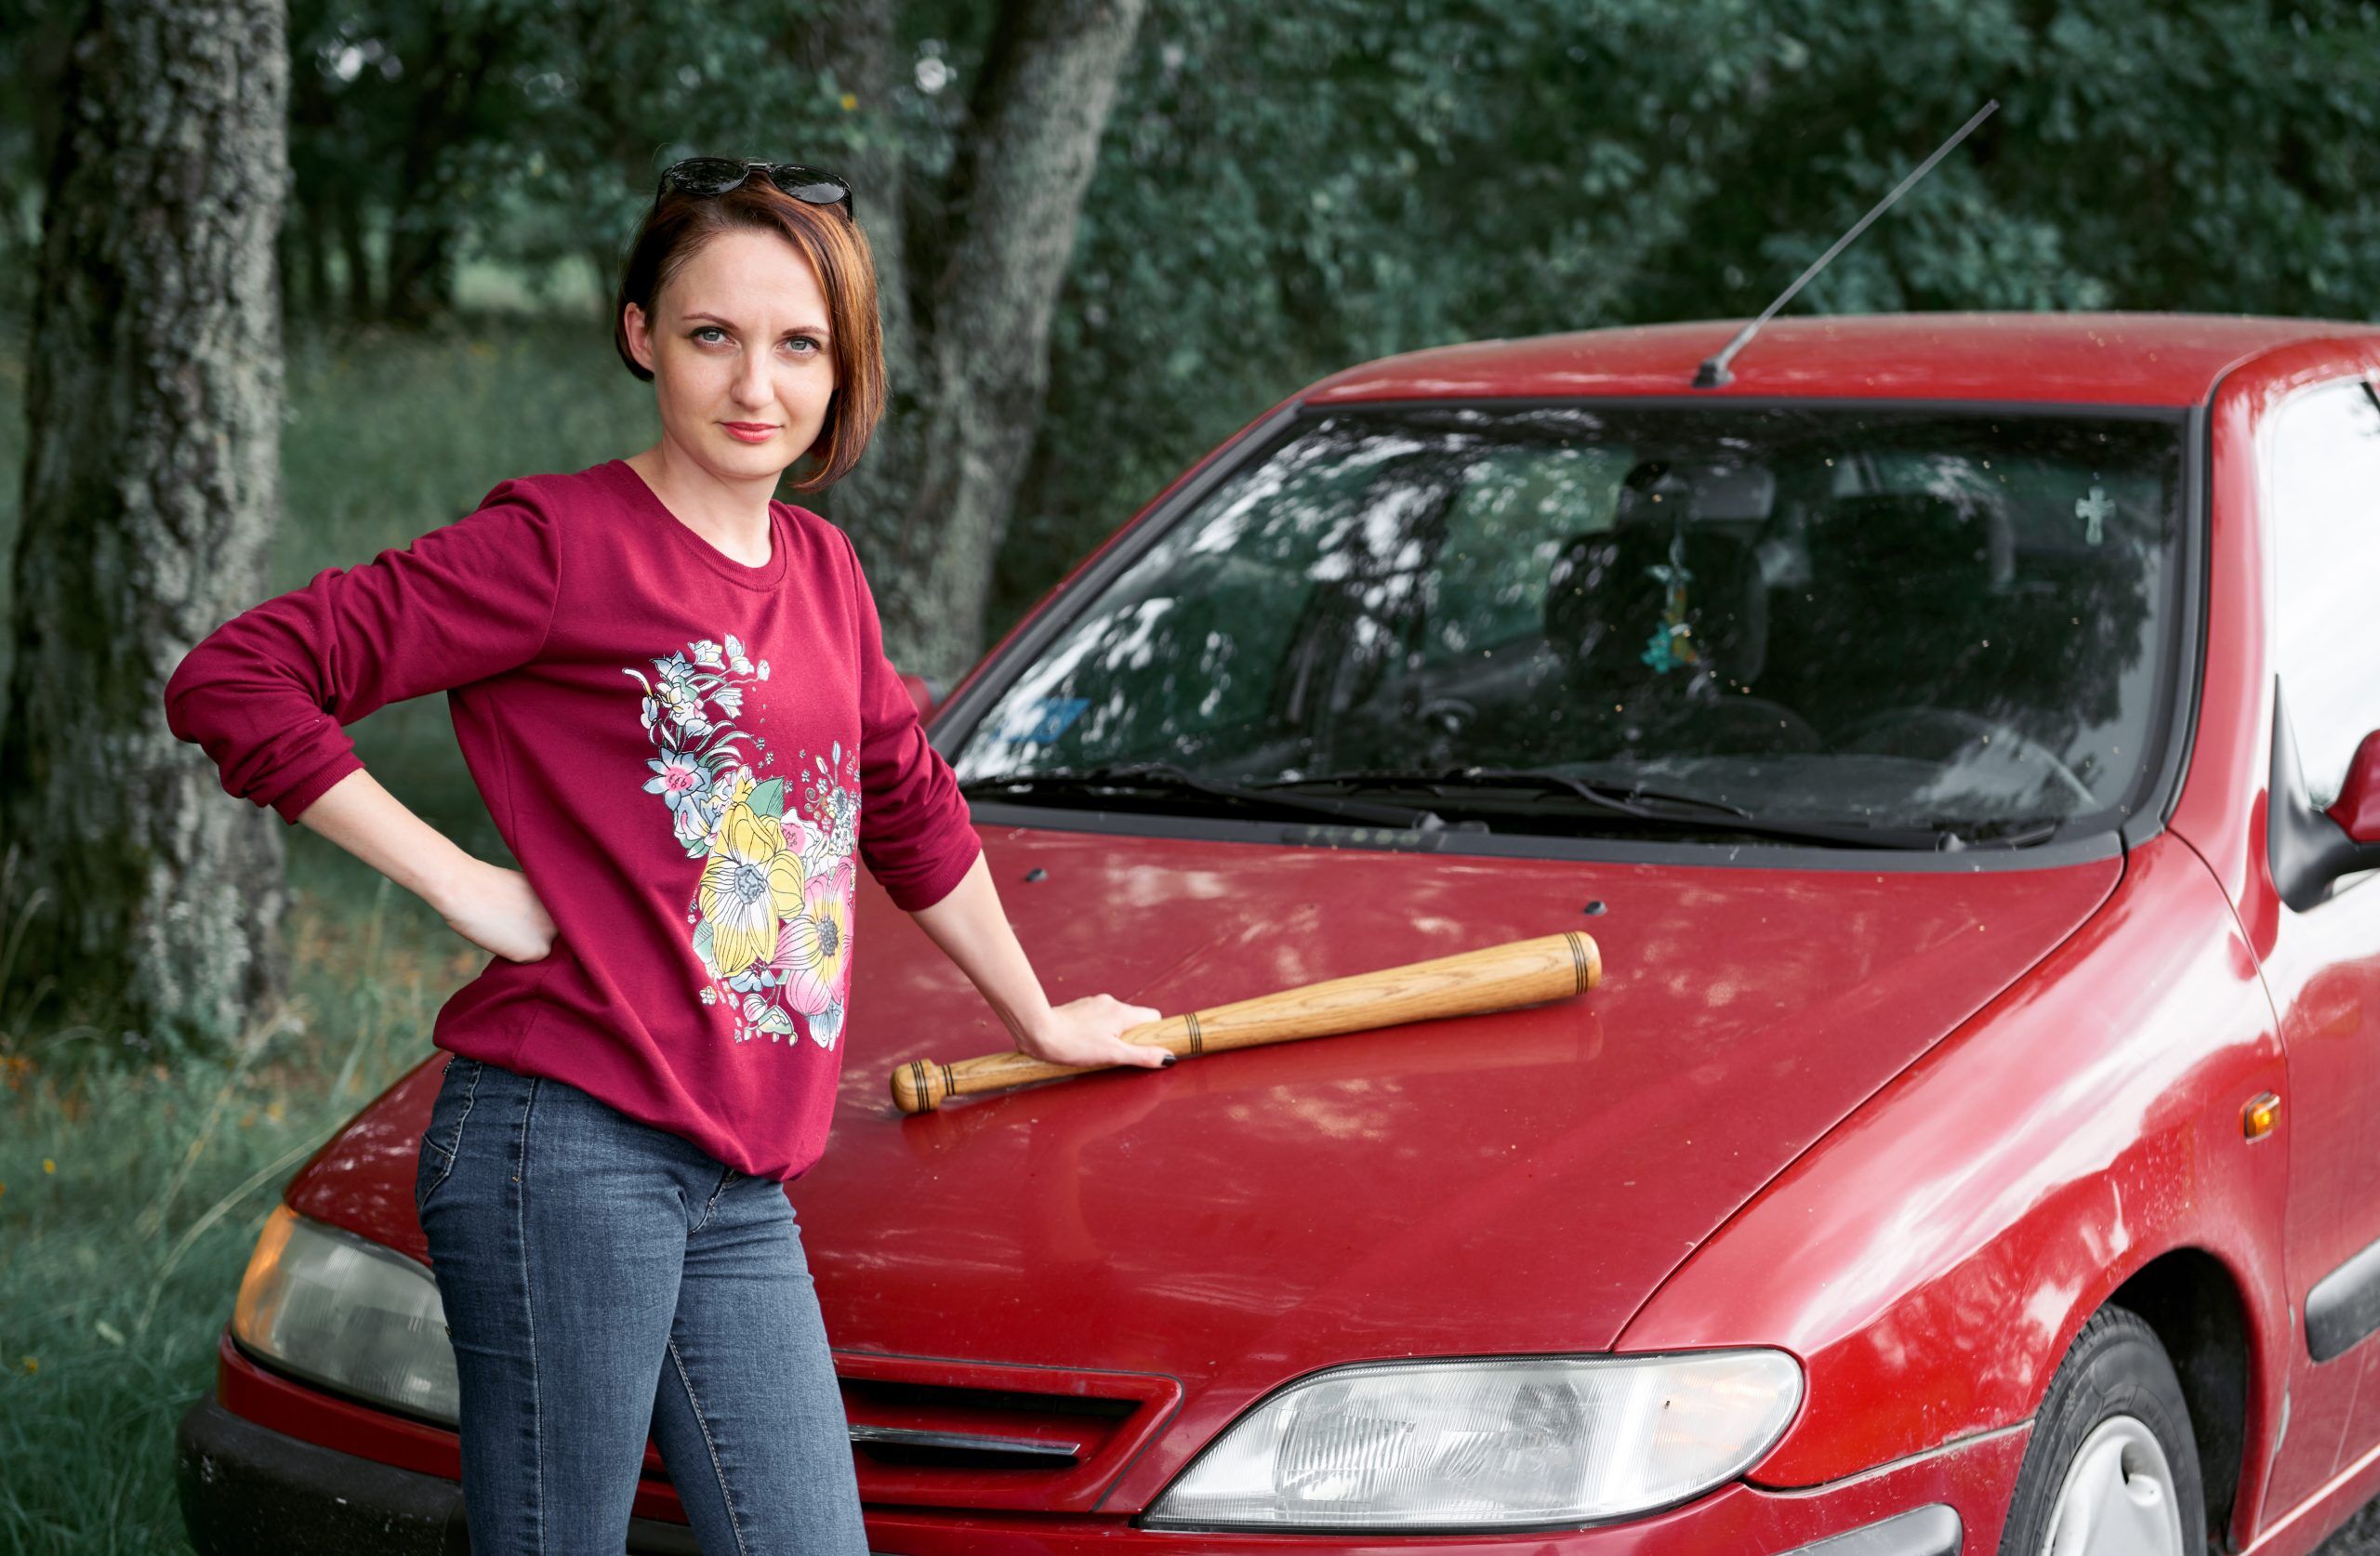 Woman with a baseball bat on a car